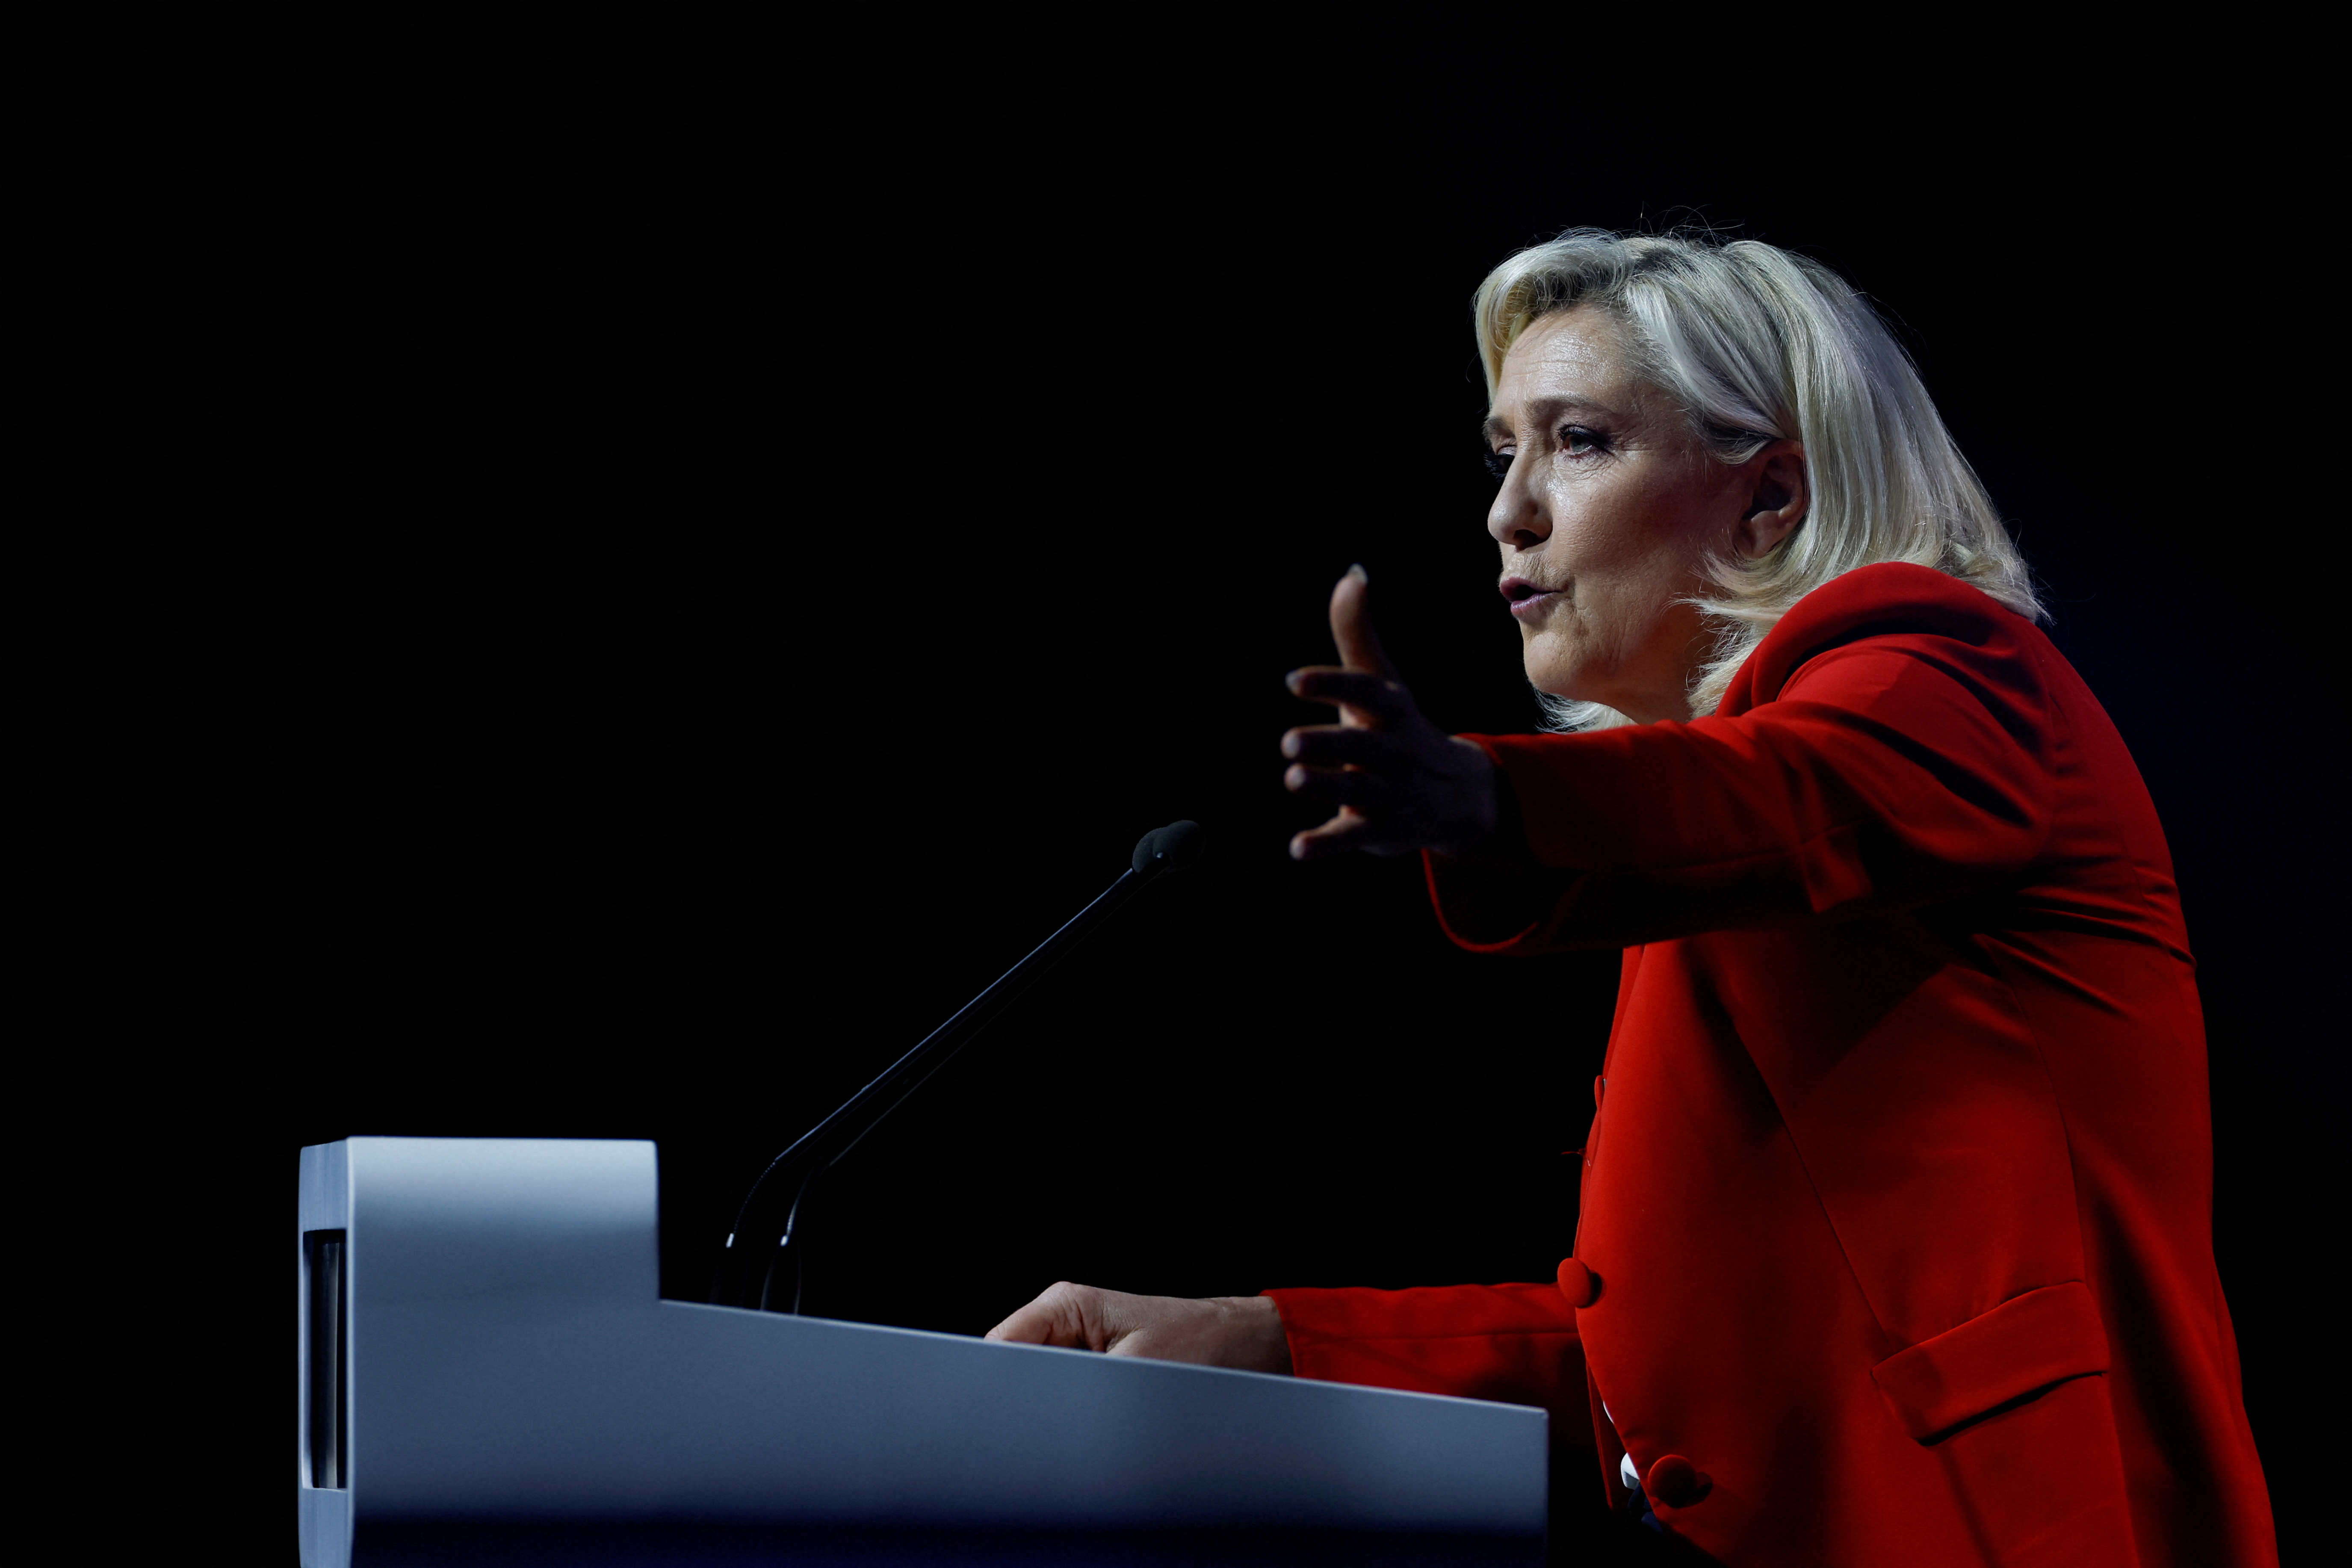 French far-right presidential candidate Le Pen campaigns in Avignon